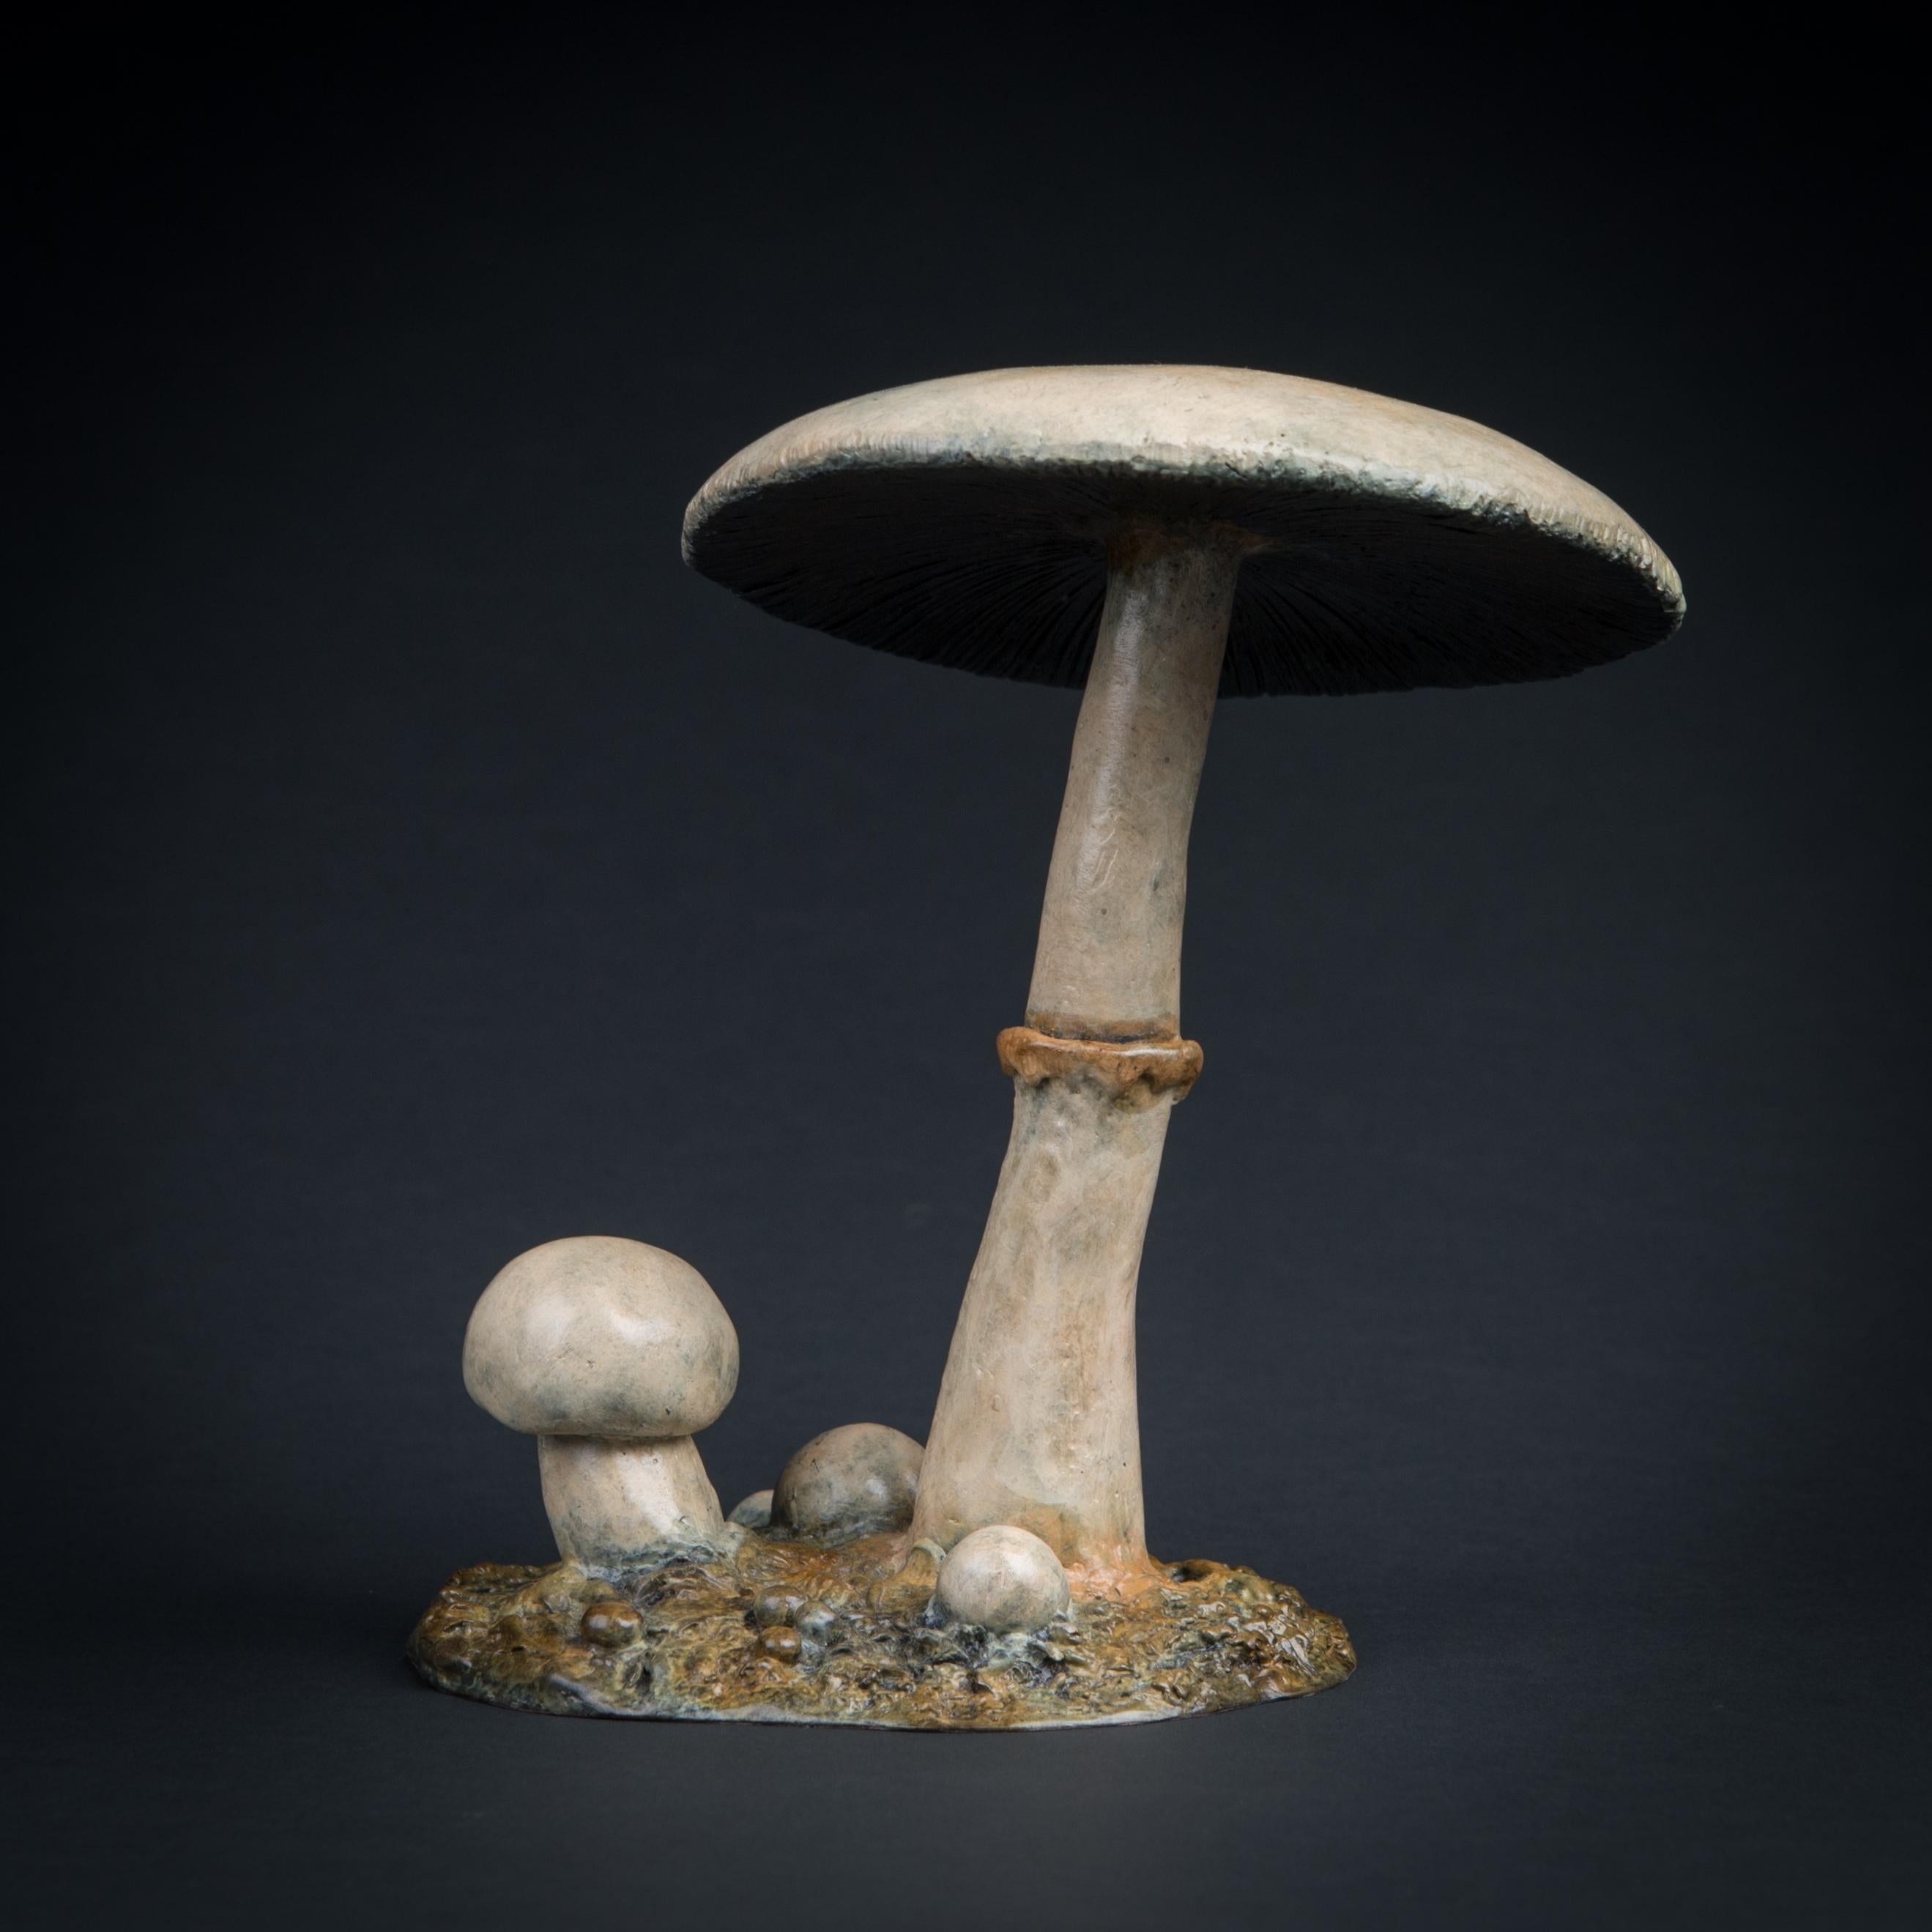 mushroom clay sculpture